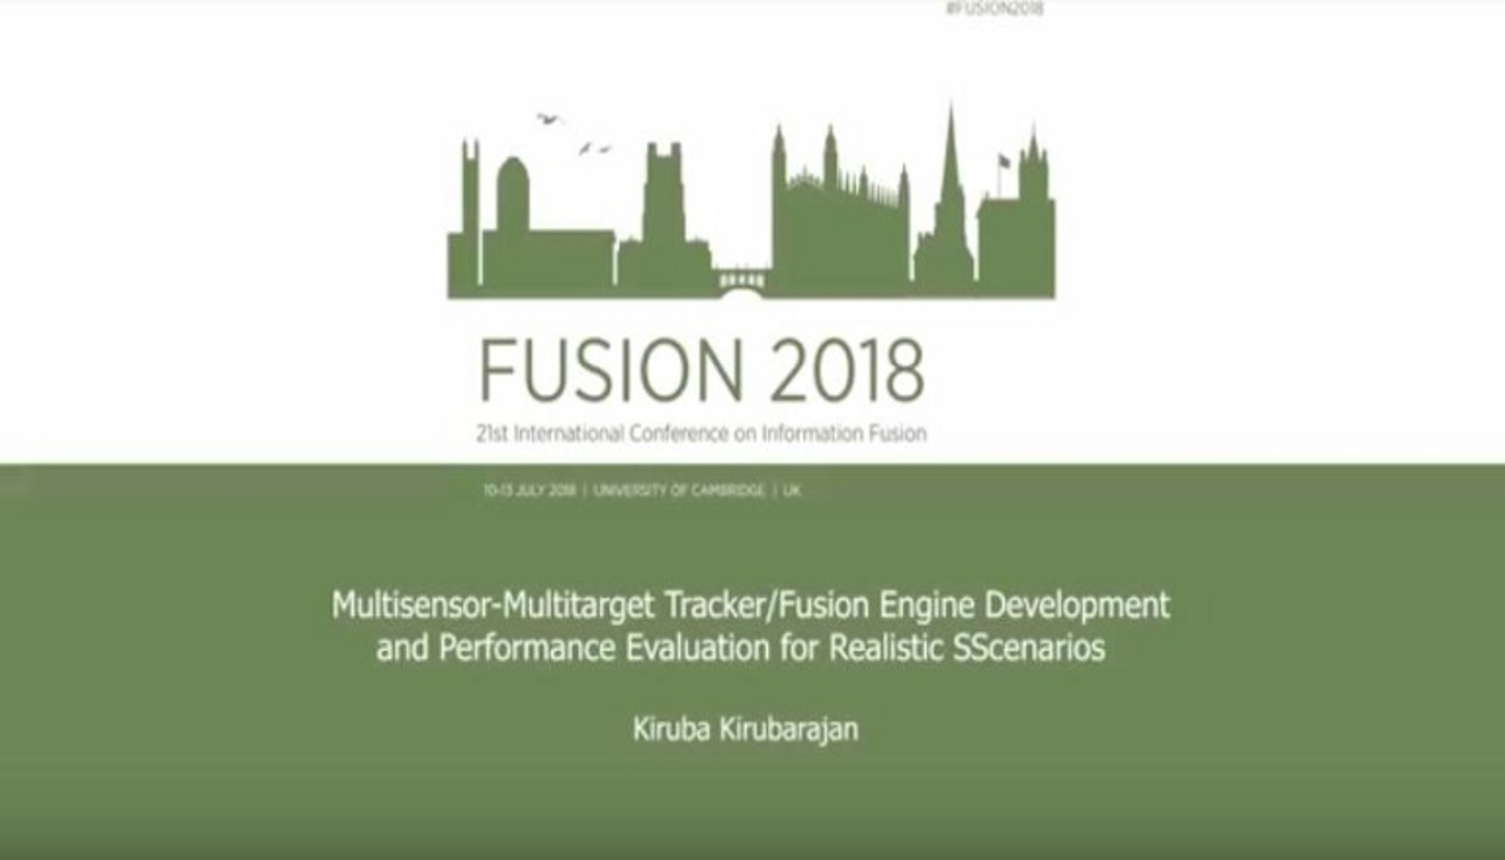 Multisensor-Multitarget Tracker/Fusion Engine Development and Performance Evaluation for Realistic Scenarios